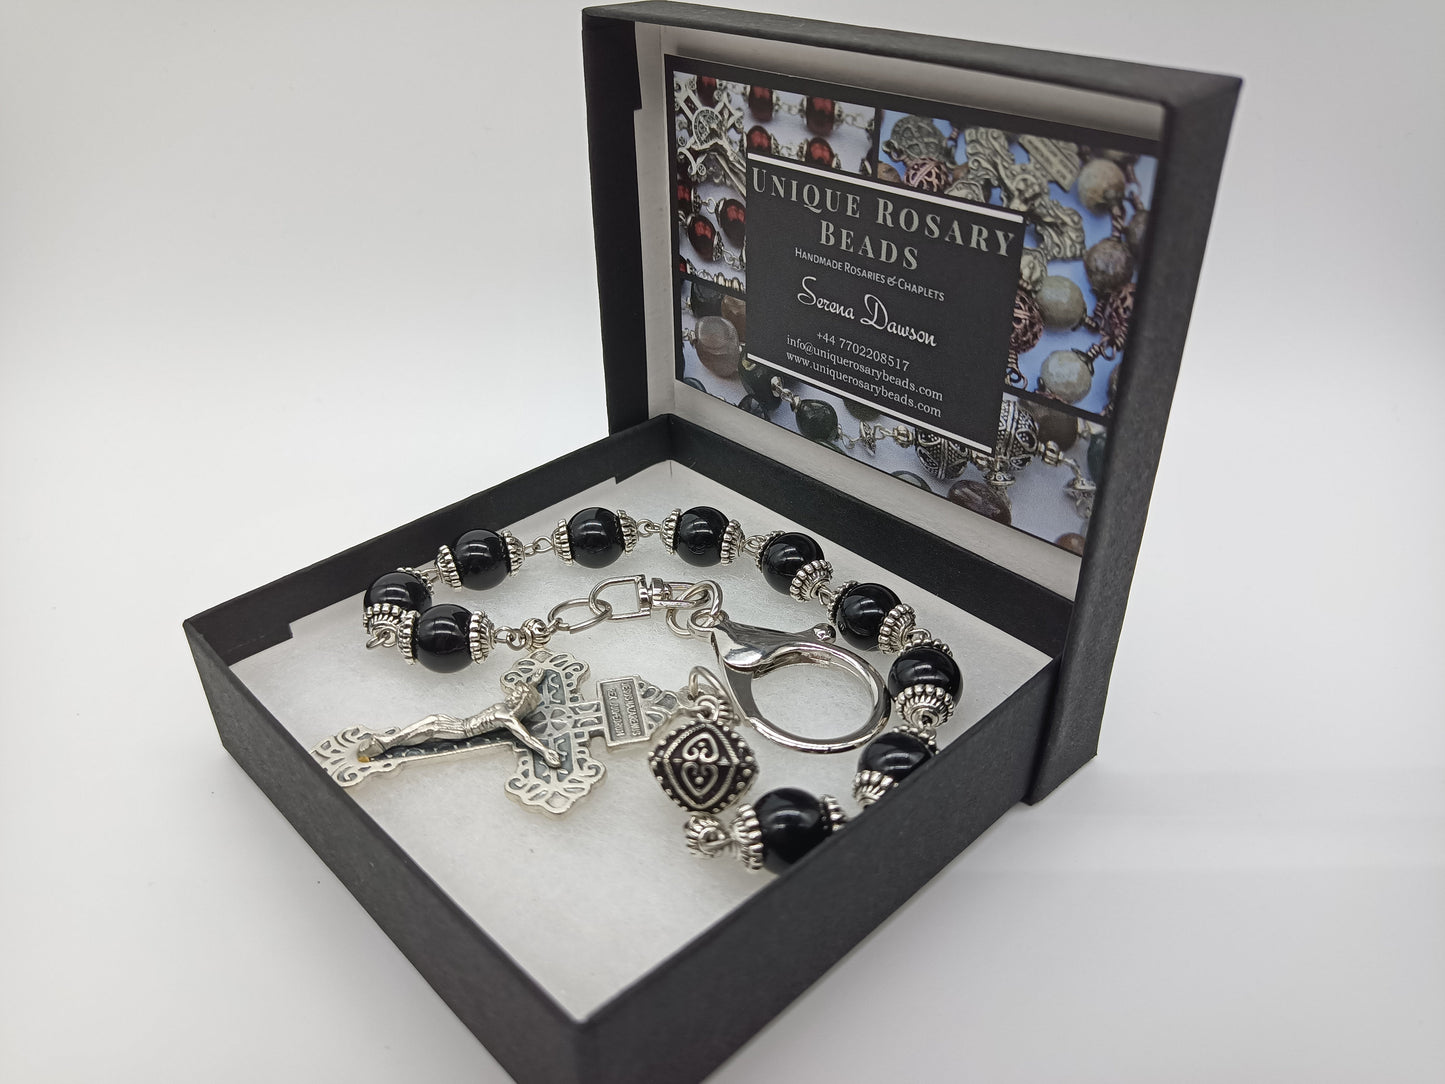 Large Onyx gemstone single decade rosary, Men's tenner rosary beads, Crucifix Rosary beads, Pocket Rosary beads.